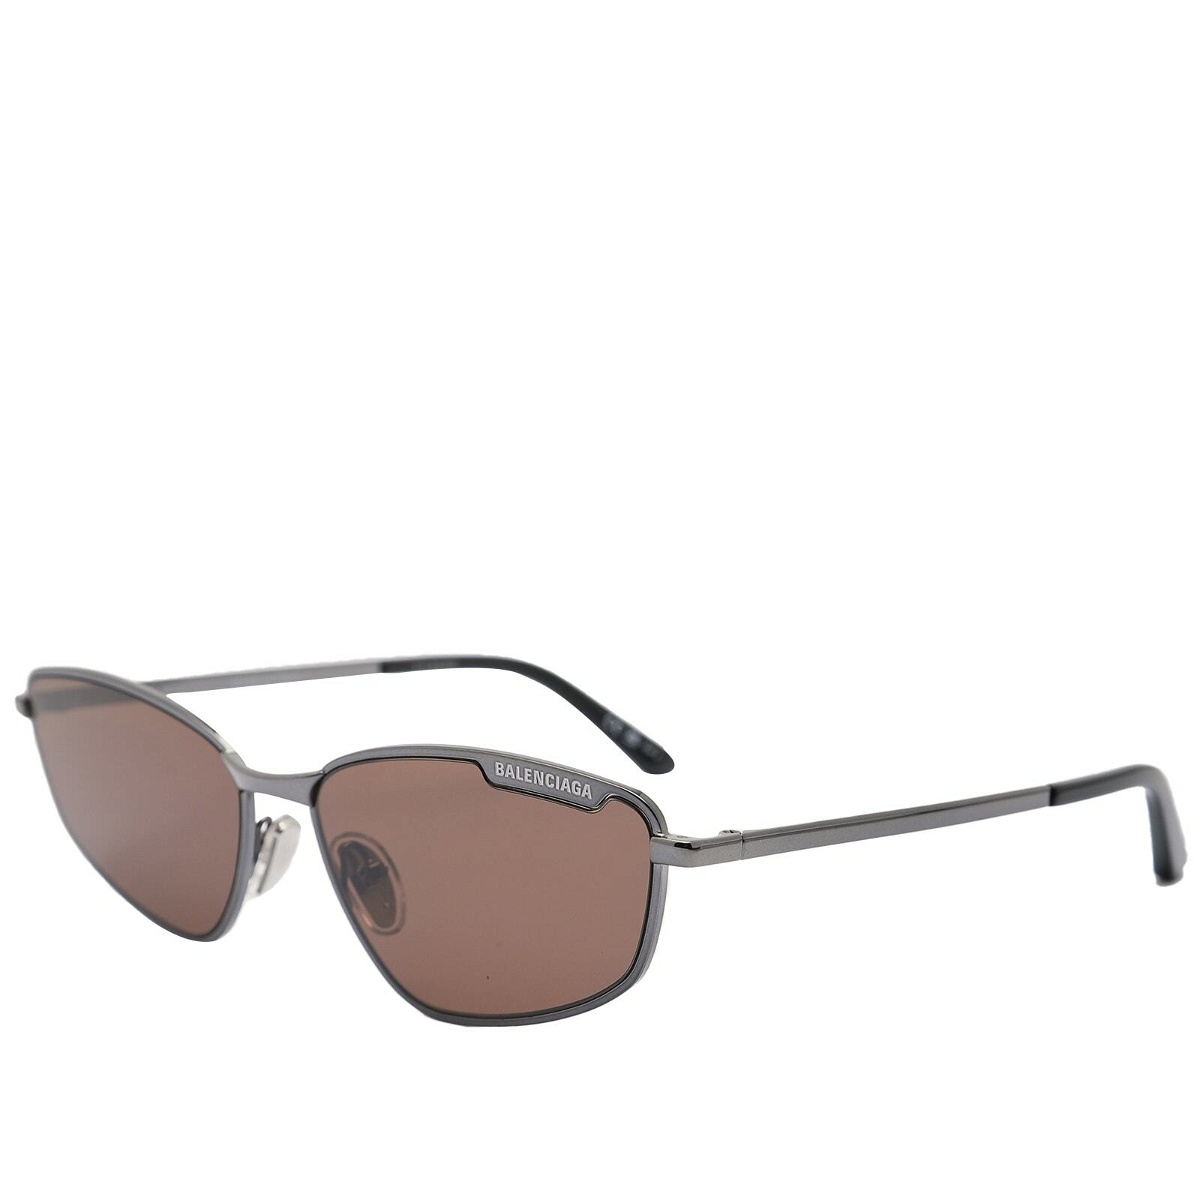 Balenciaga Eyewear BB0277S Sunglasses in Ruthenium/Brown Balenciaga